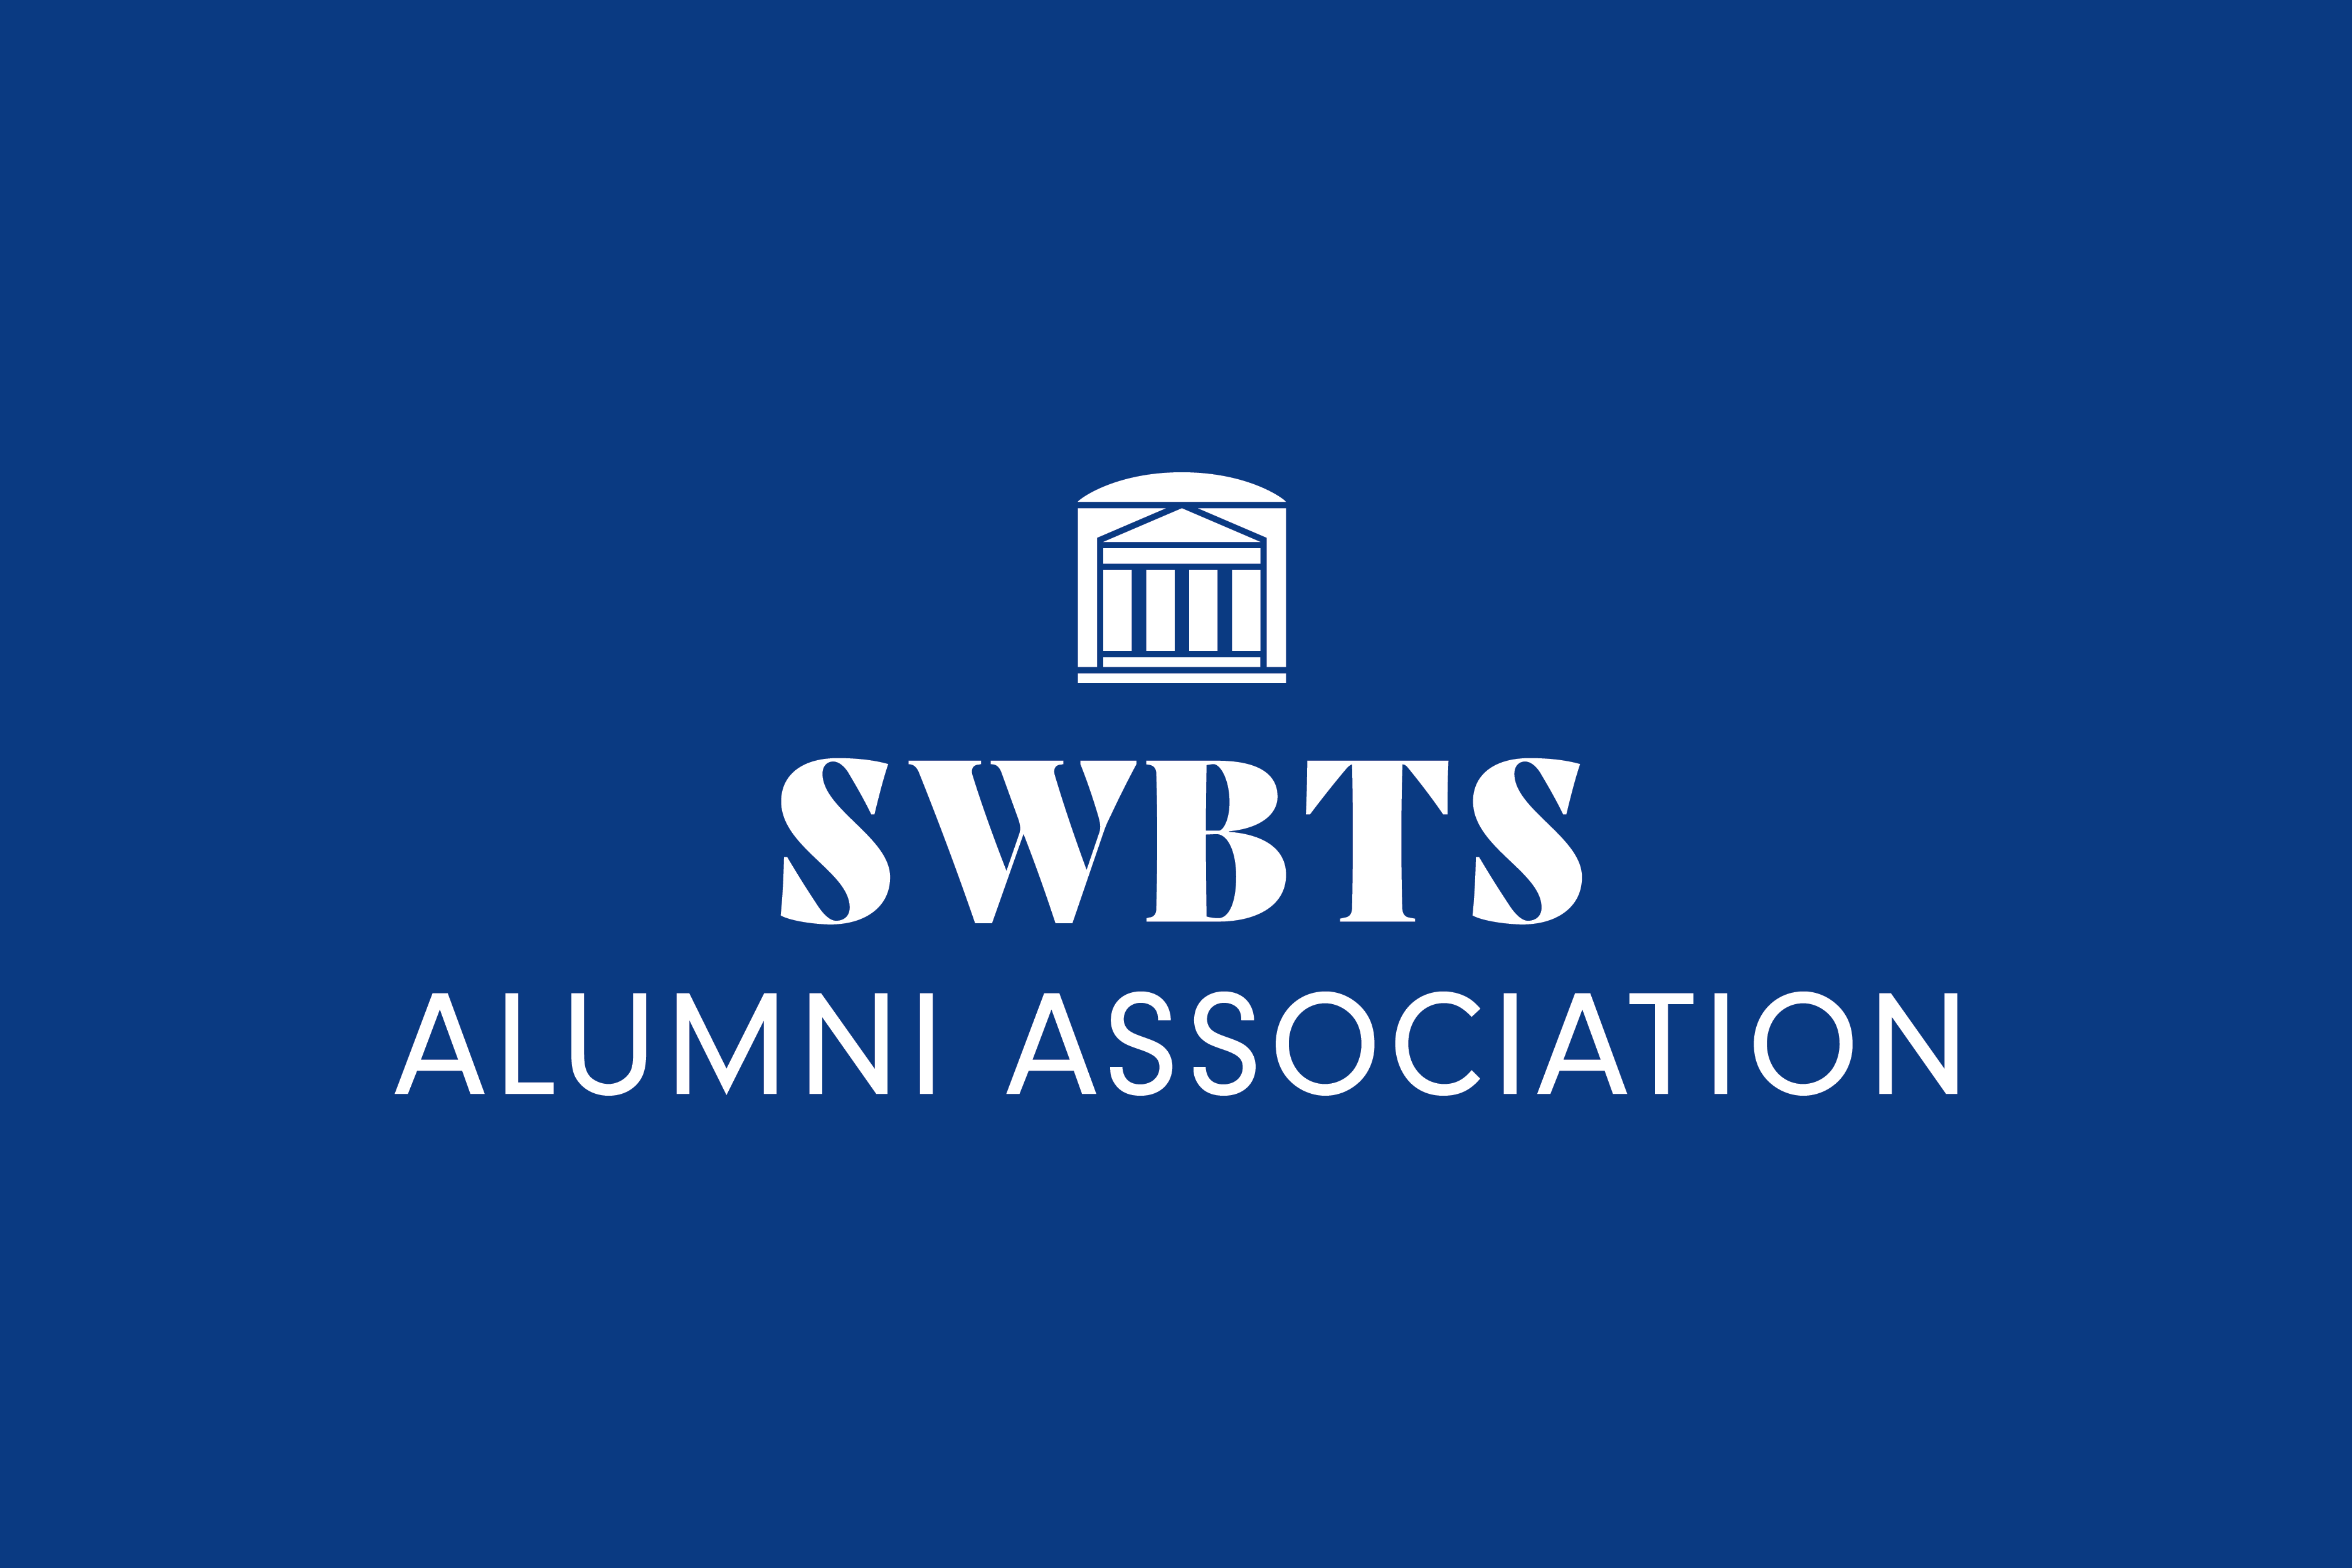 Southwestern relaunches alumni association for seminary, TBC graduates